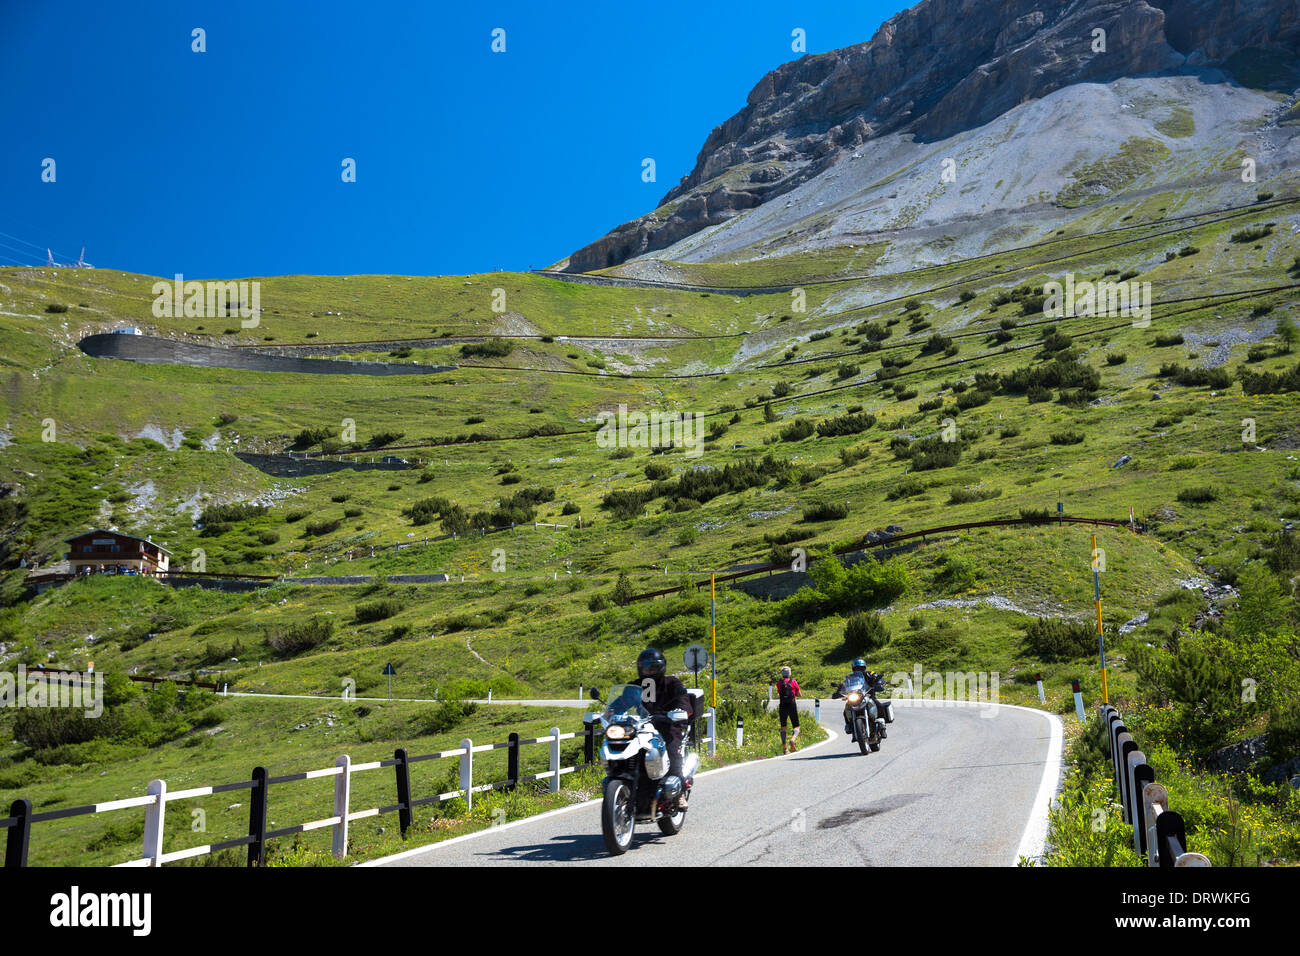 Motorcycles and walker on Stelvio Pass, Passo dello Stelvio, Stilfser Joch, on route Trafoi to Bormio, the Alps, Northern Italy Stock Photo